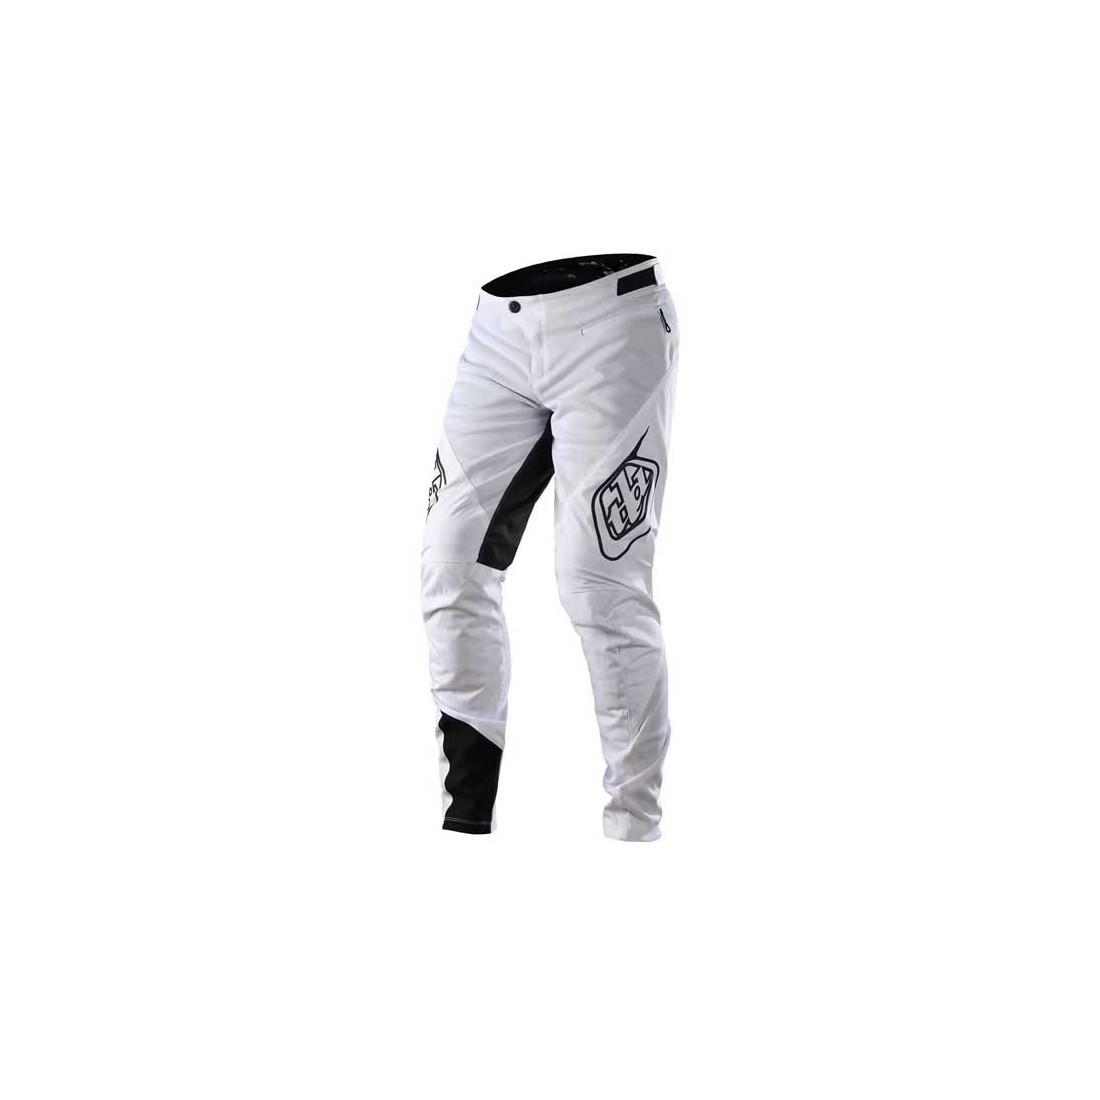 Test: Probamos los pantalones Troy Lee Designs Sprint Pant para